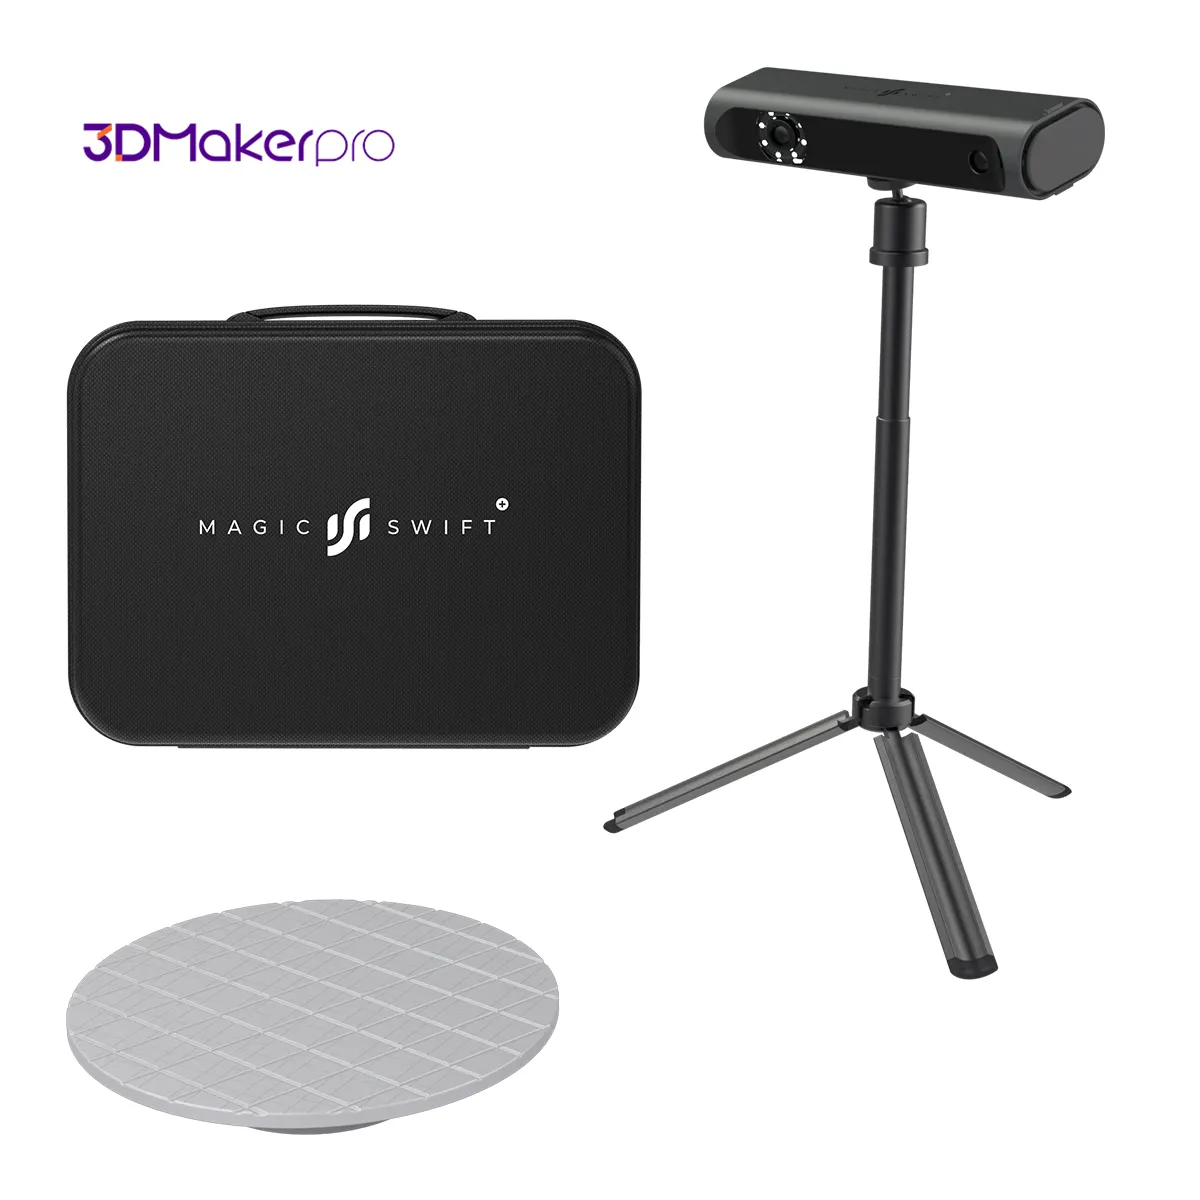 3DMakerPro Magic Swift Plus Portable 3D Scanner Mono Premium 0.1mm High-precision Multi-mode Scanning 0.25mm High-resolution